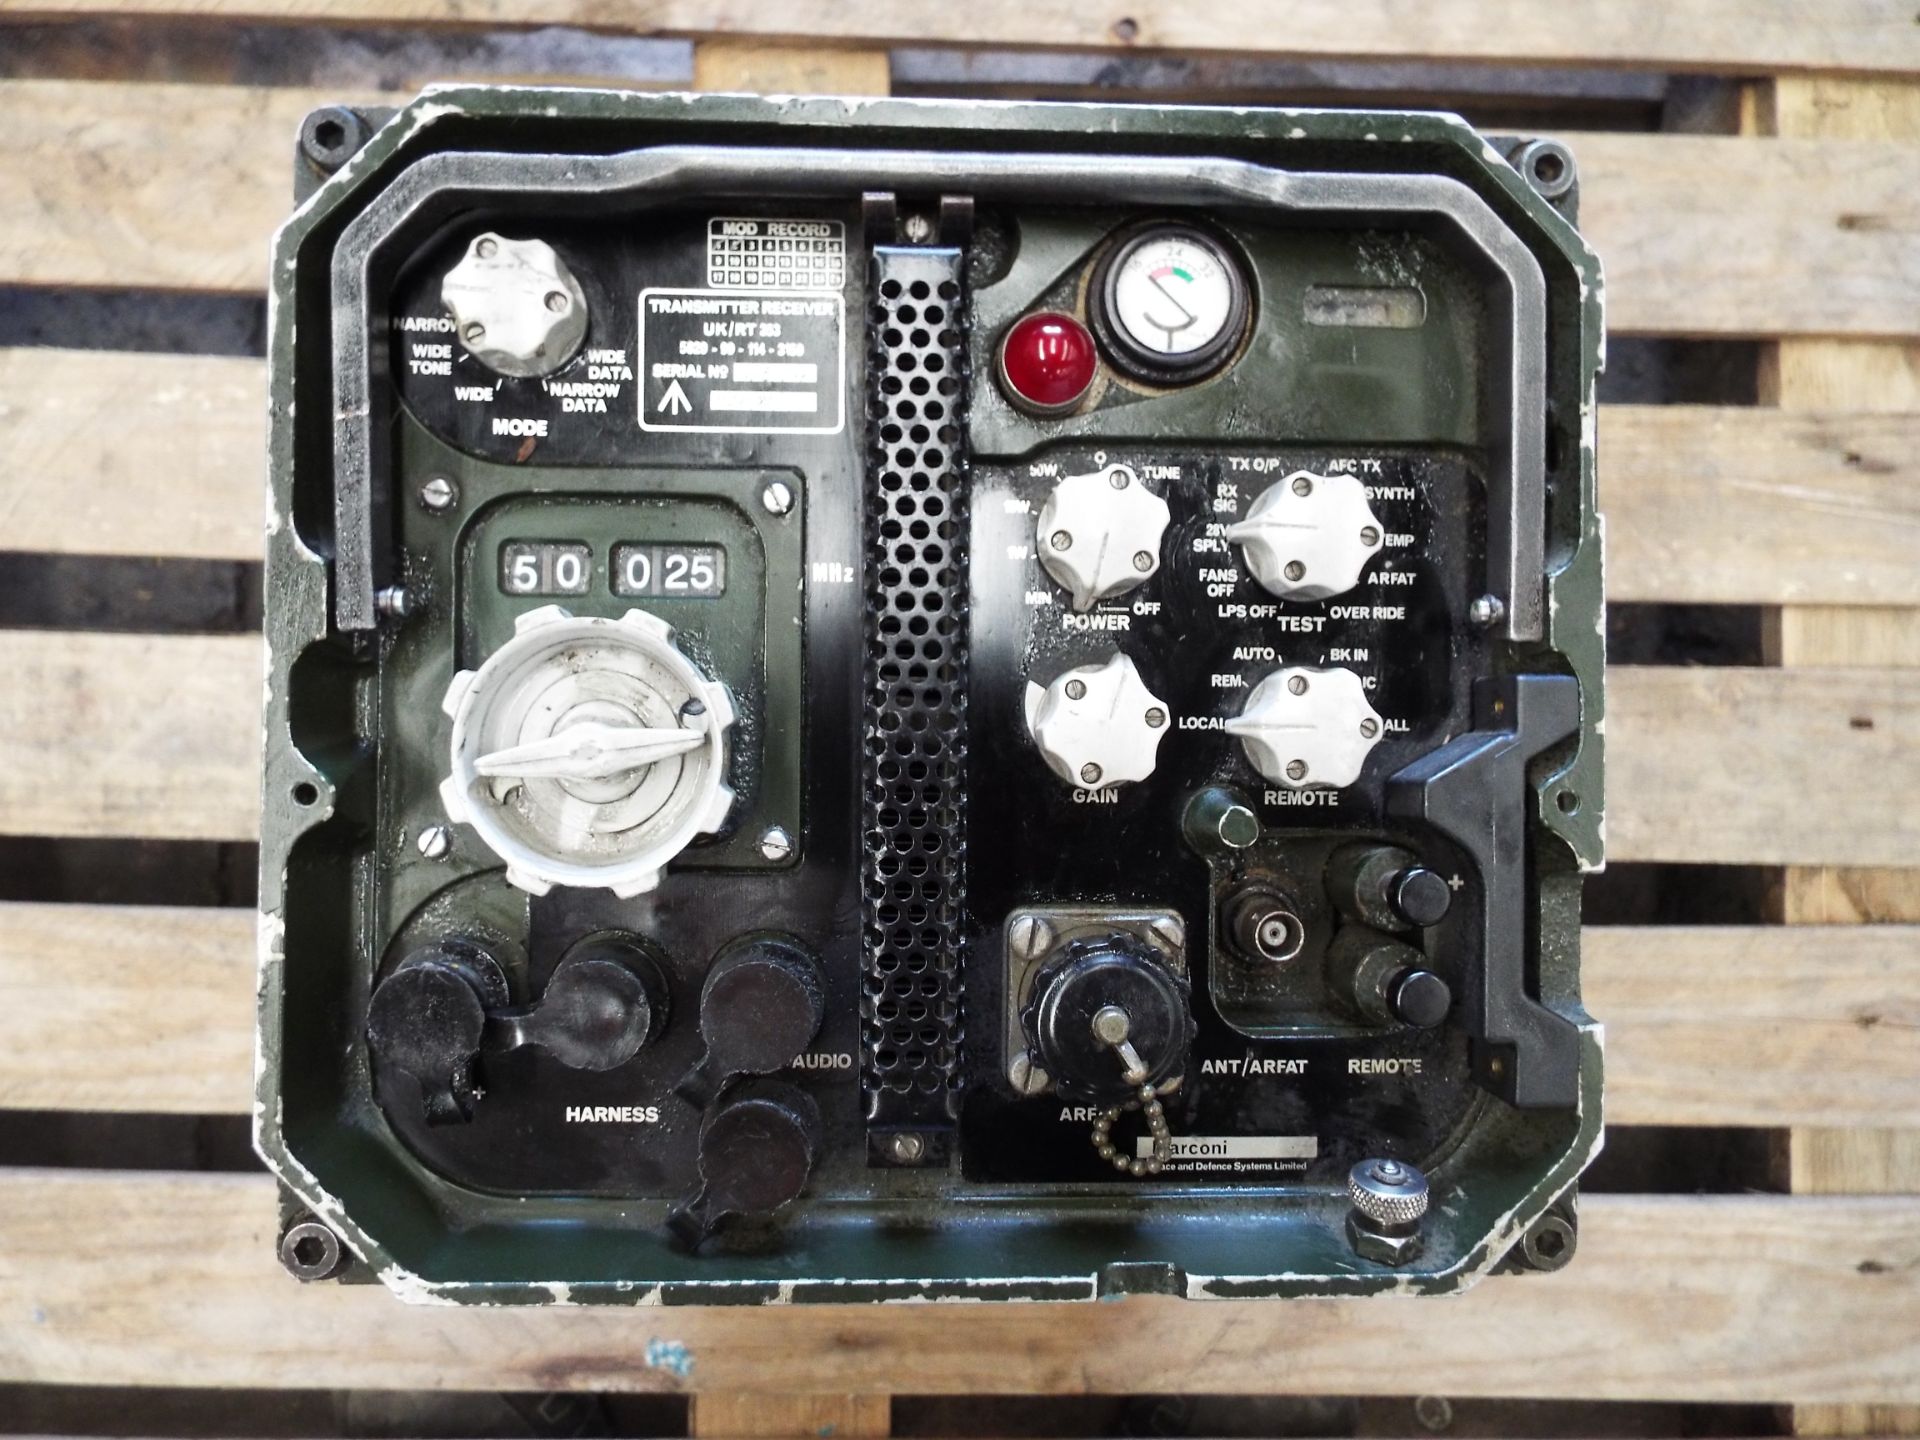 Clansman RT353 Transmitter Reciever